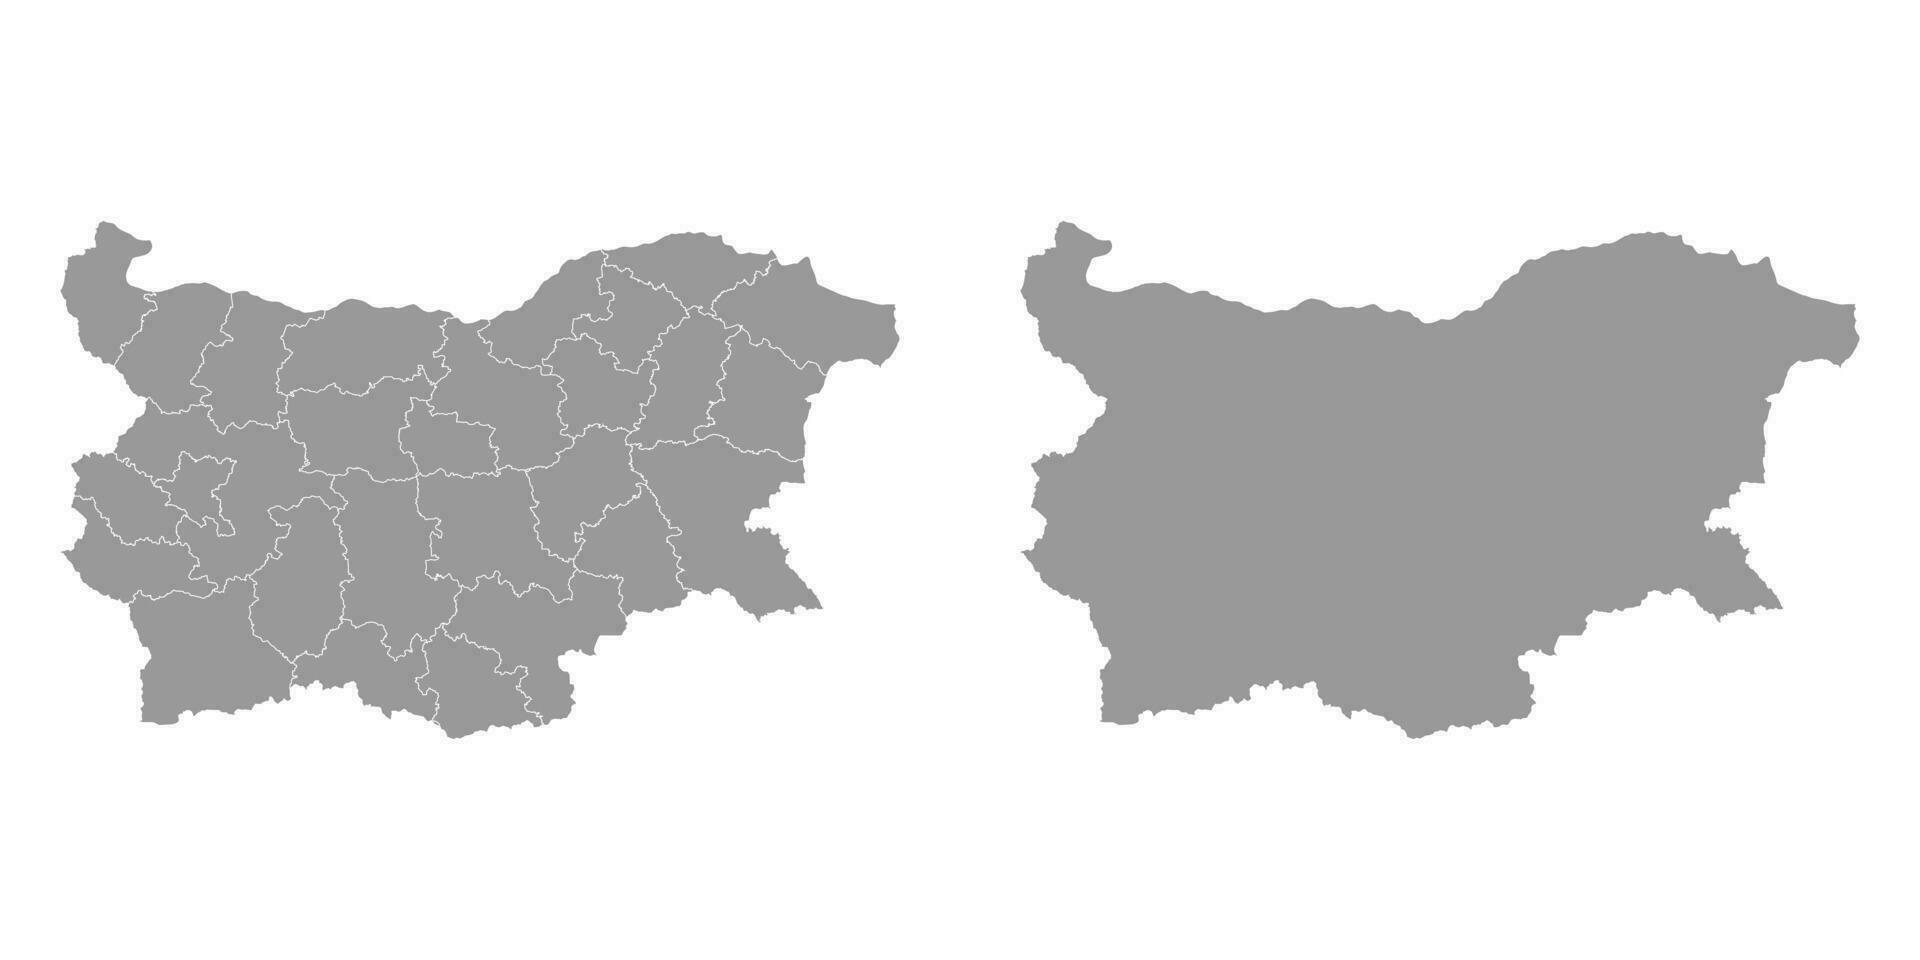 Bulgarien grau Karte mit Provinzen. Vektor Illustration.